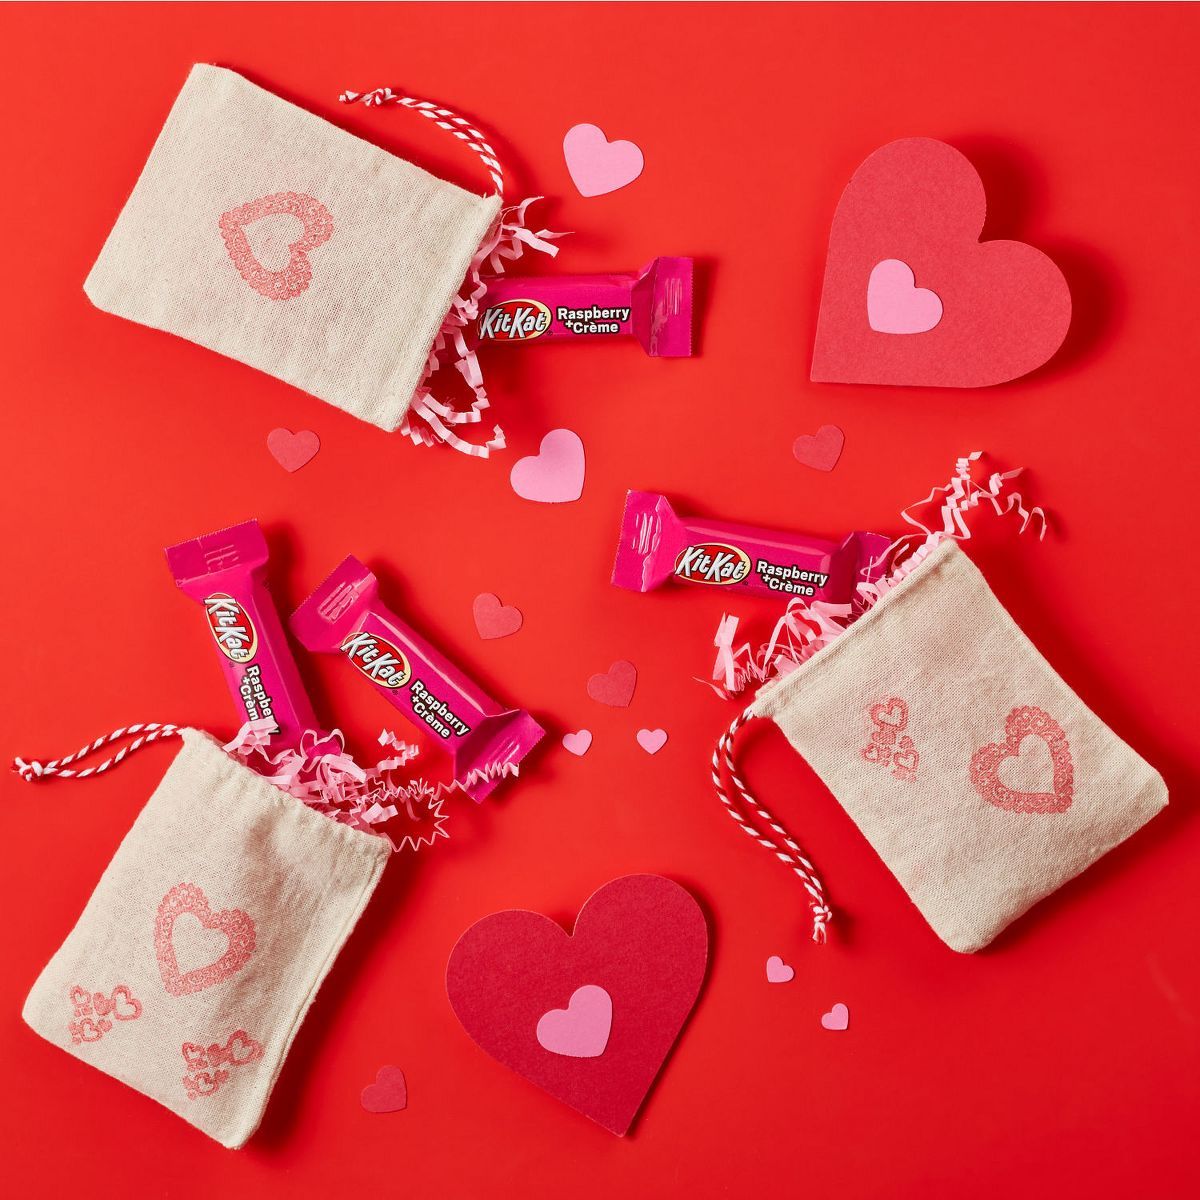 Kit Kat Valentine's Day Raspberry Crème Wafer Candy Miniatures - 8.4oz | Target